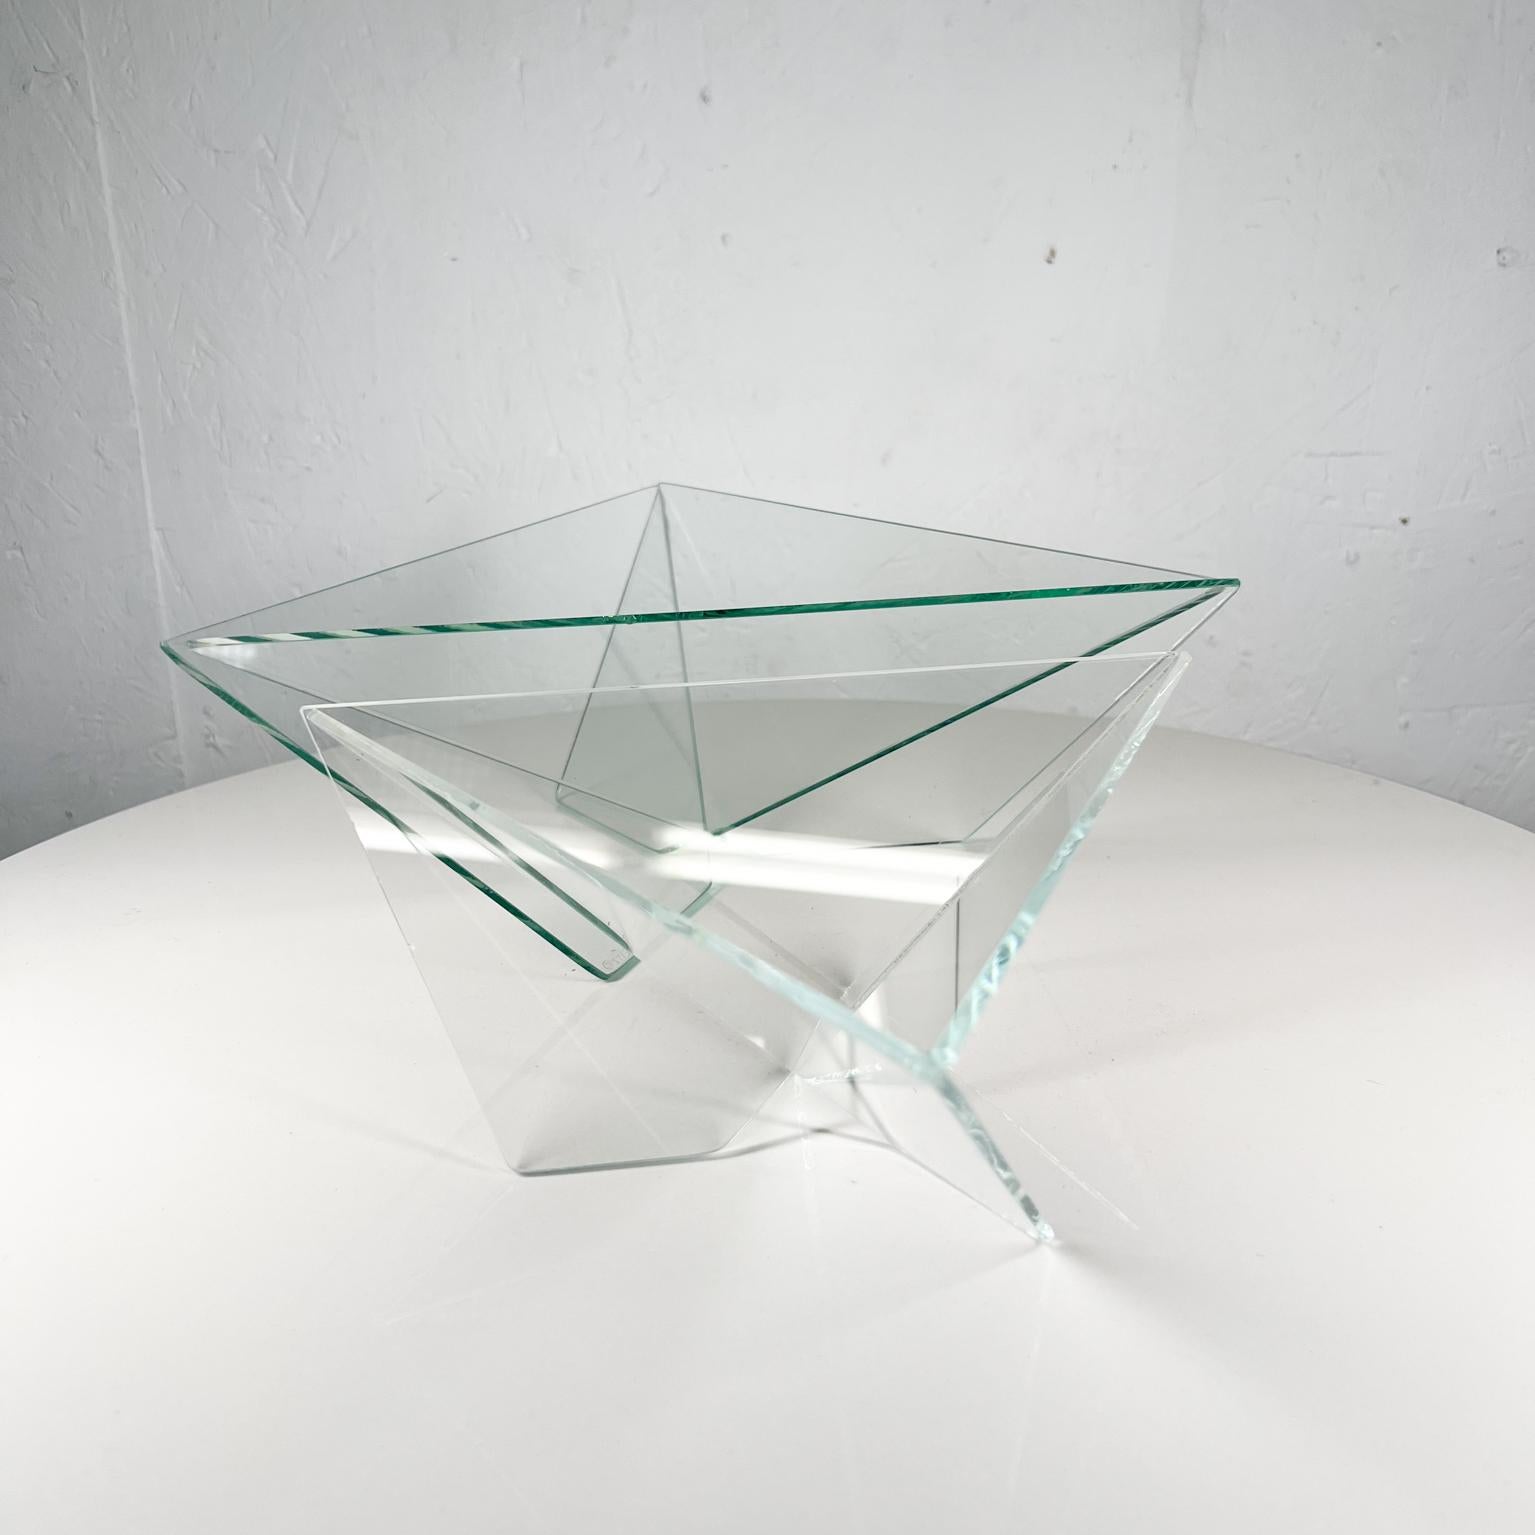 1988 pyramid modern glass art bowl john seitz $550.00